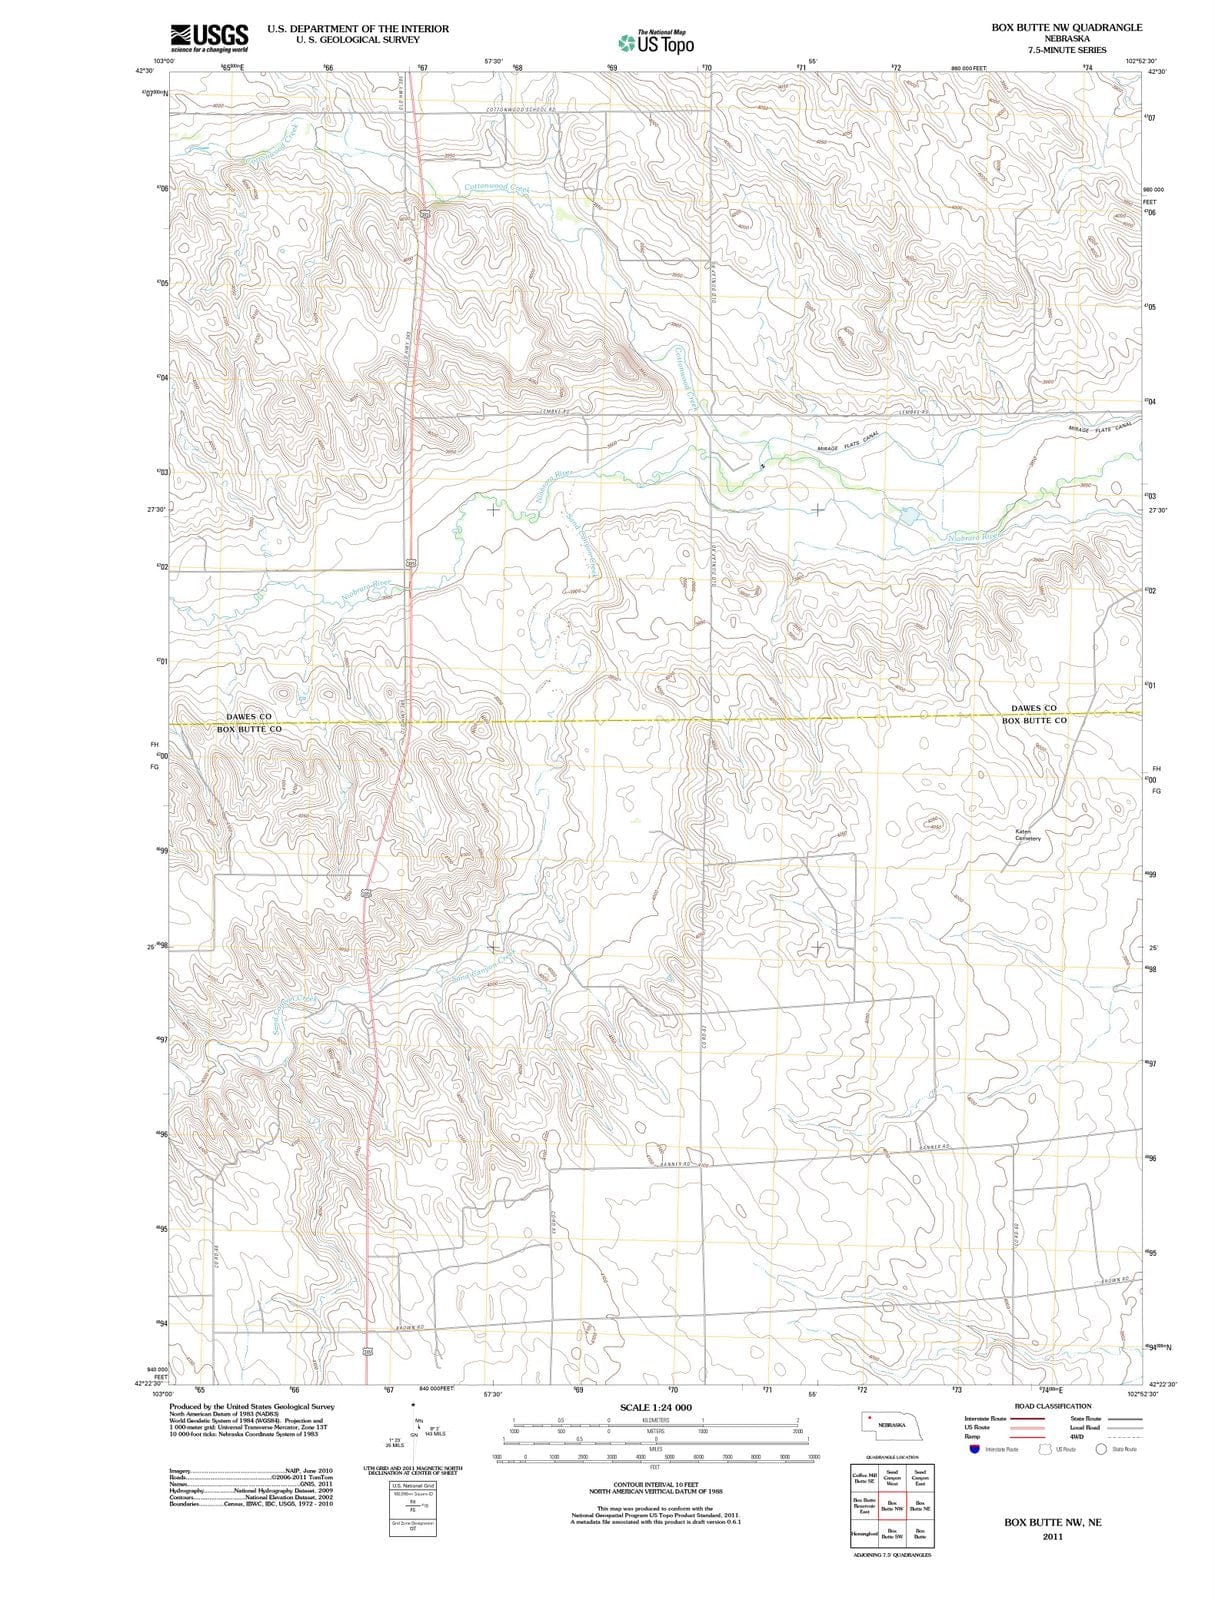 2011 Box Butte, NE - Nebraska - USGS Topographic Map v3